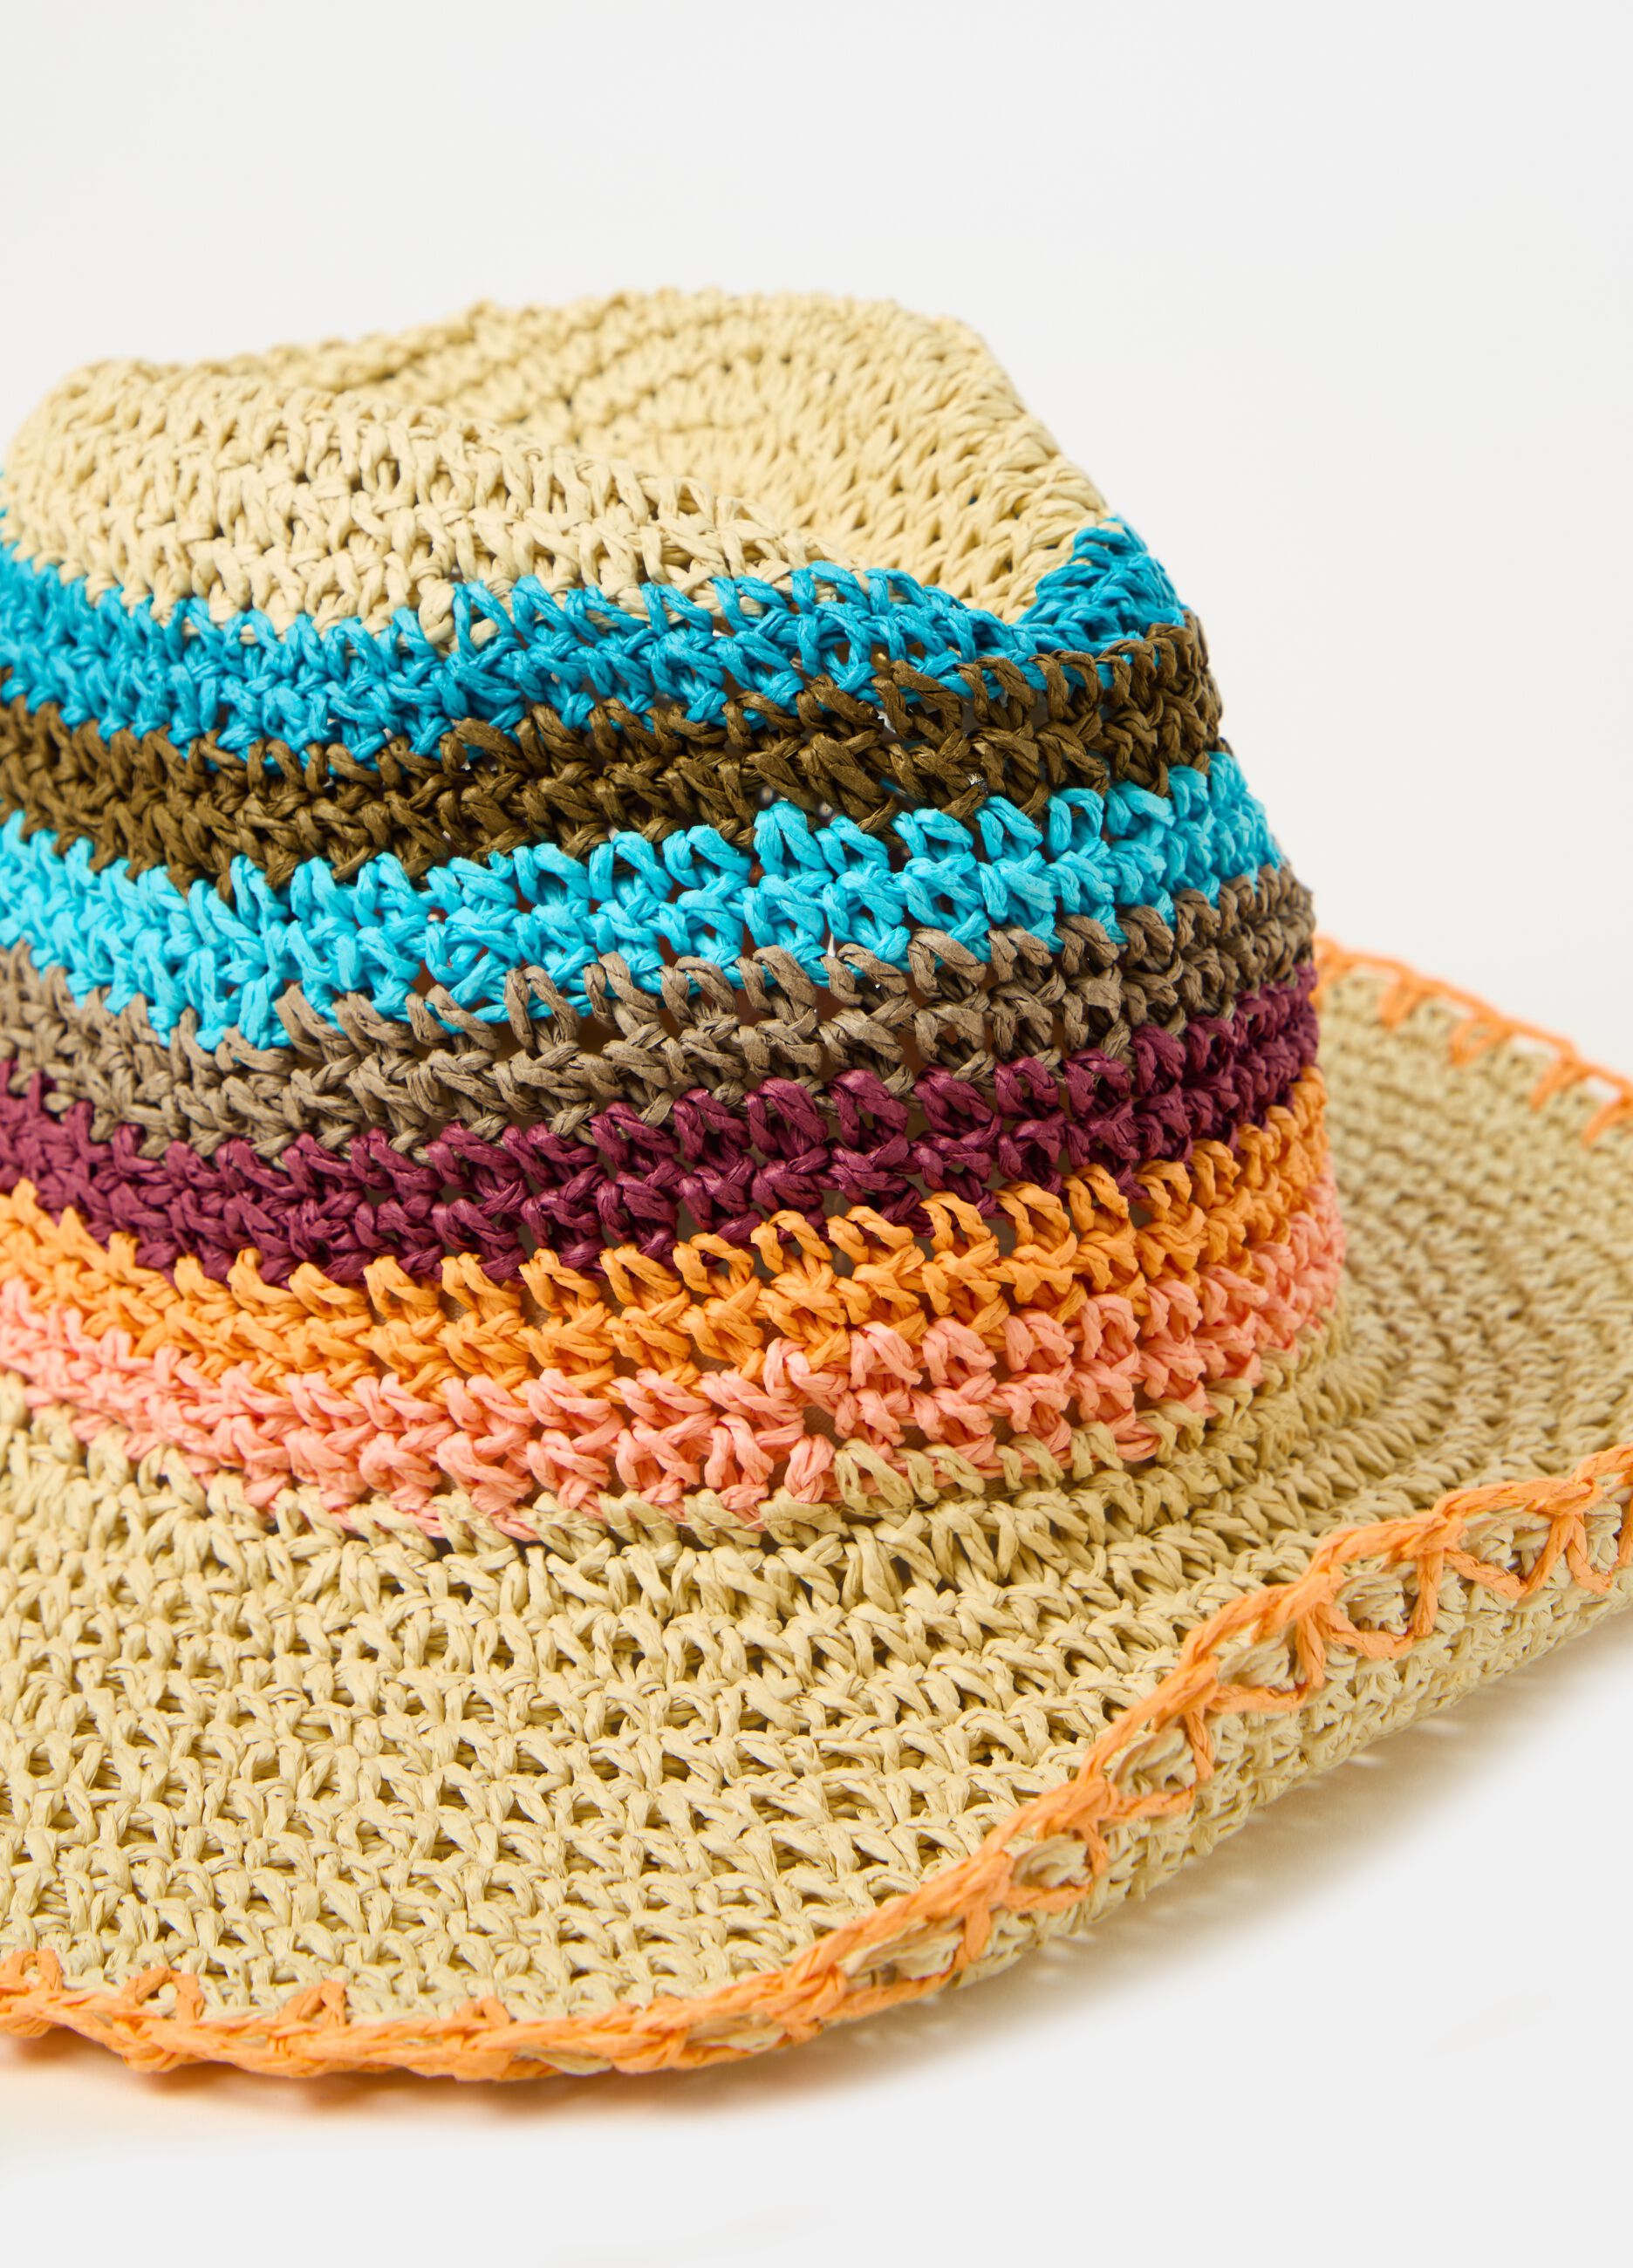 Raffia hat with stripes